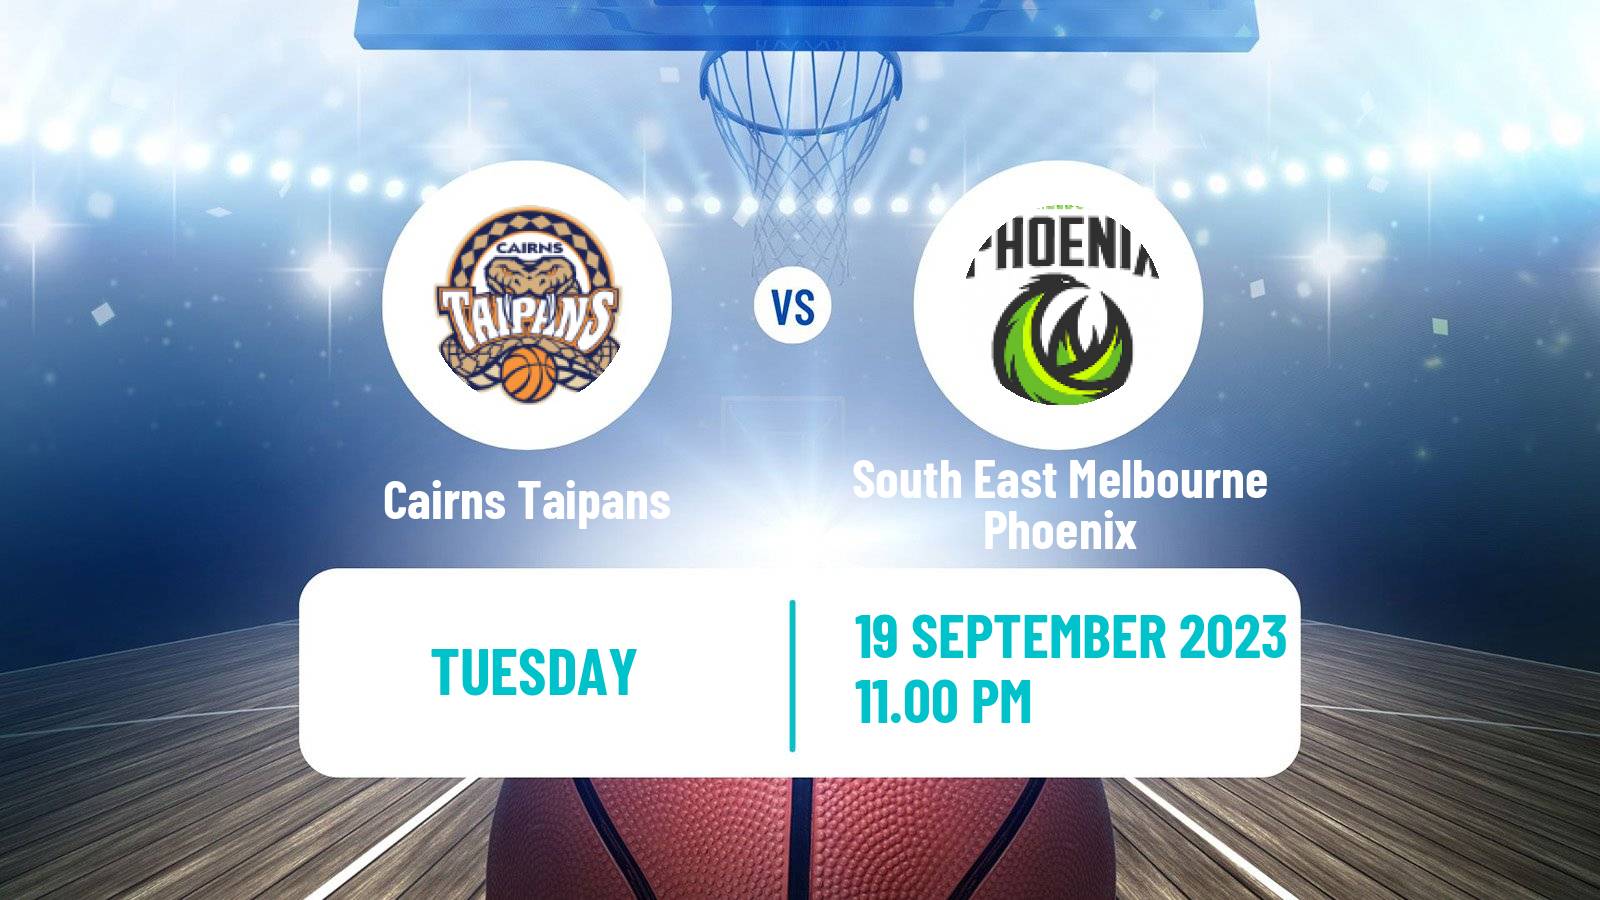 Basketball Club Friendly Basketball Cairns Taipans - South East Melbourne Phoenix